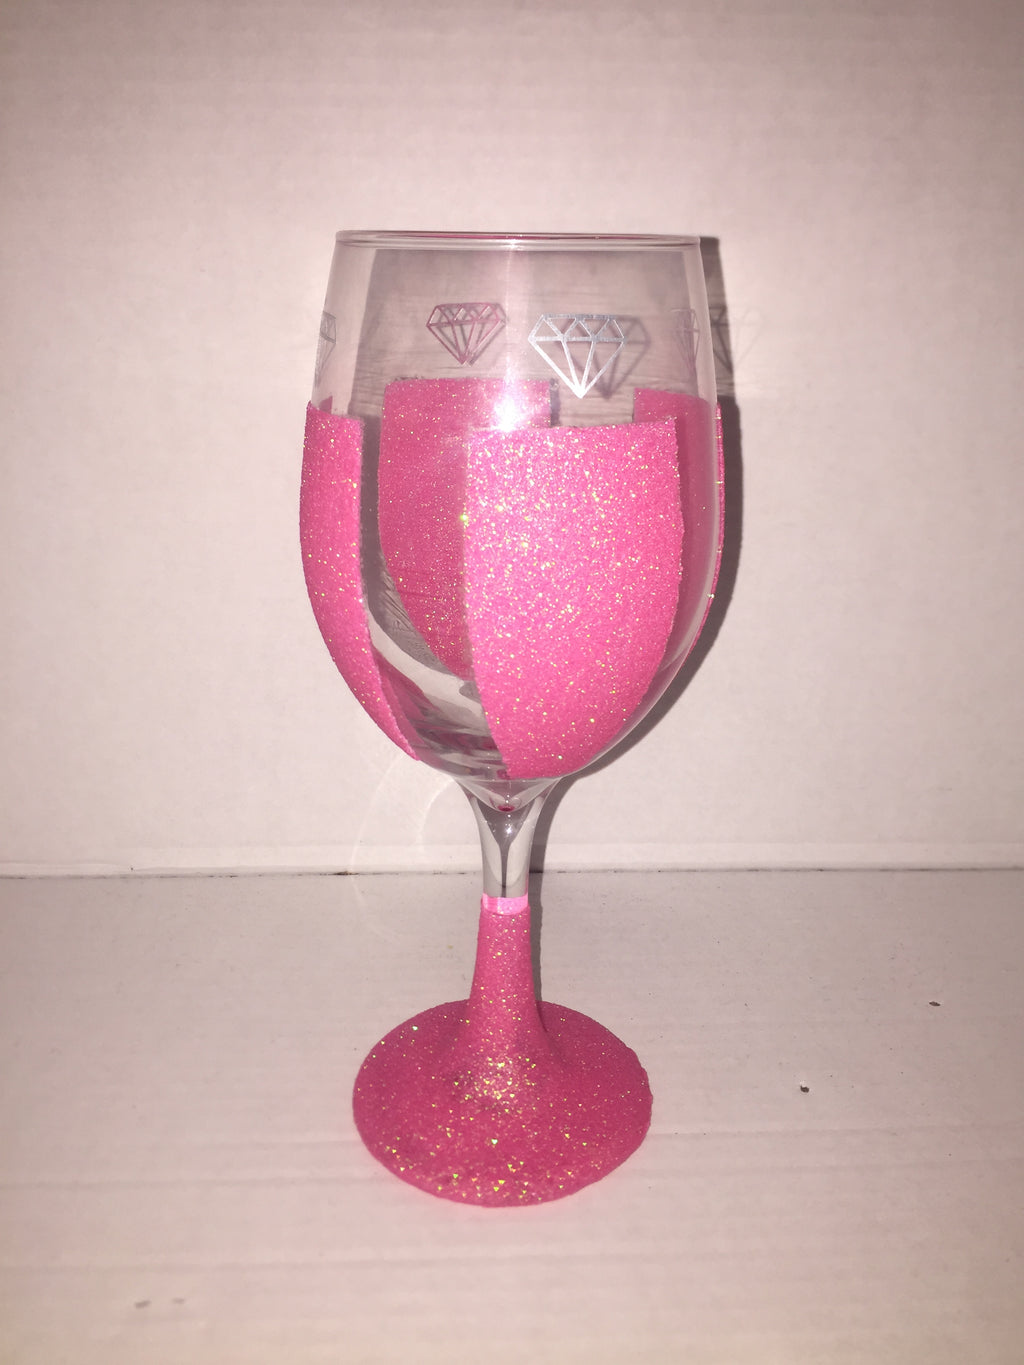 Hot pink wine glass